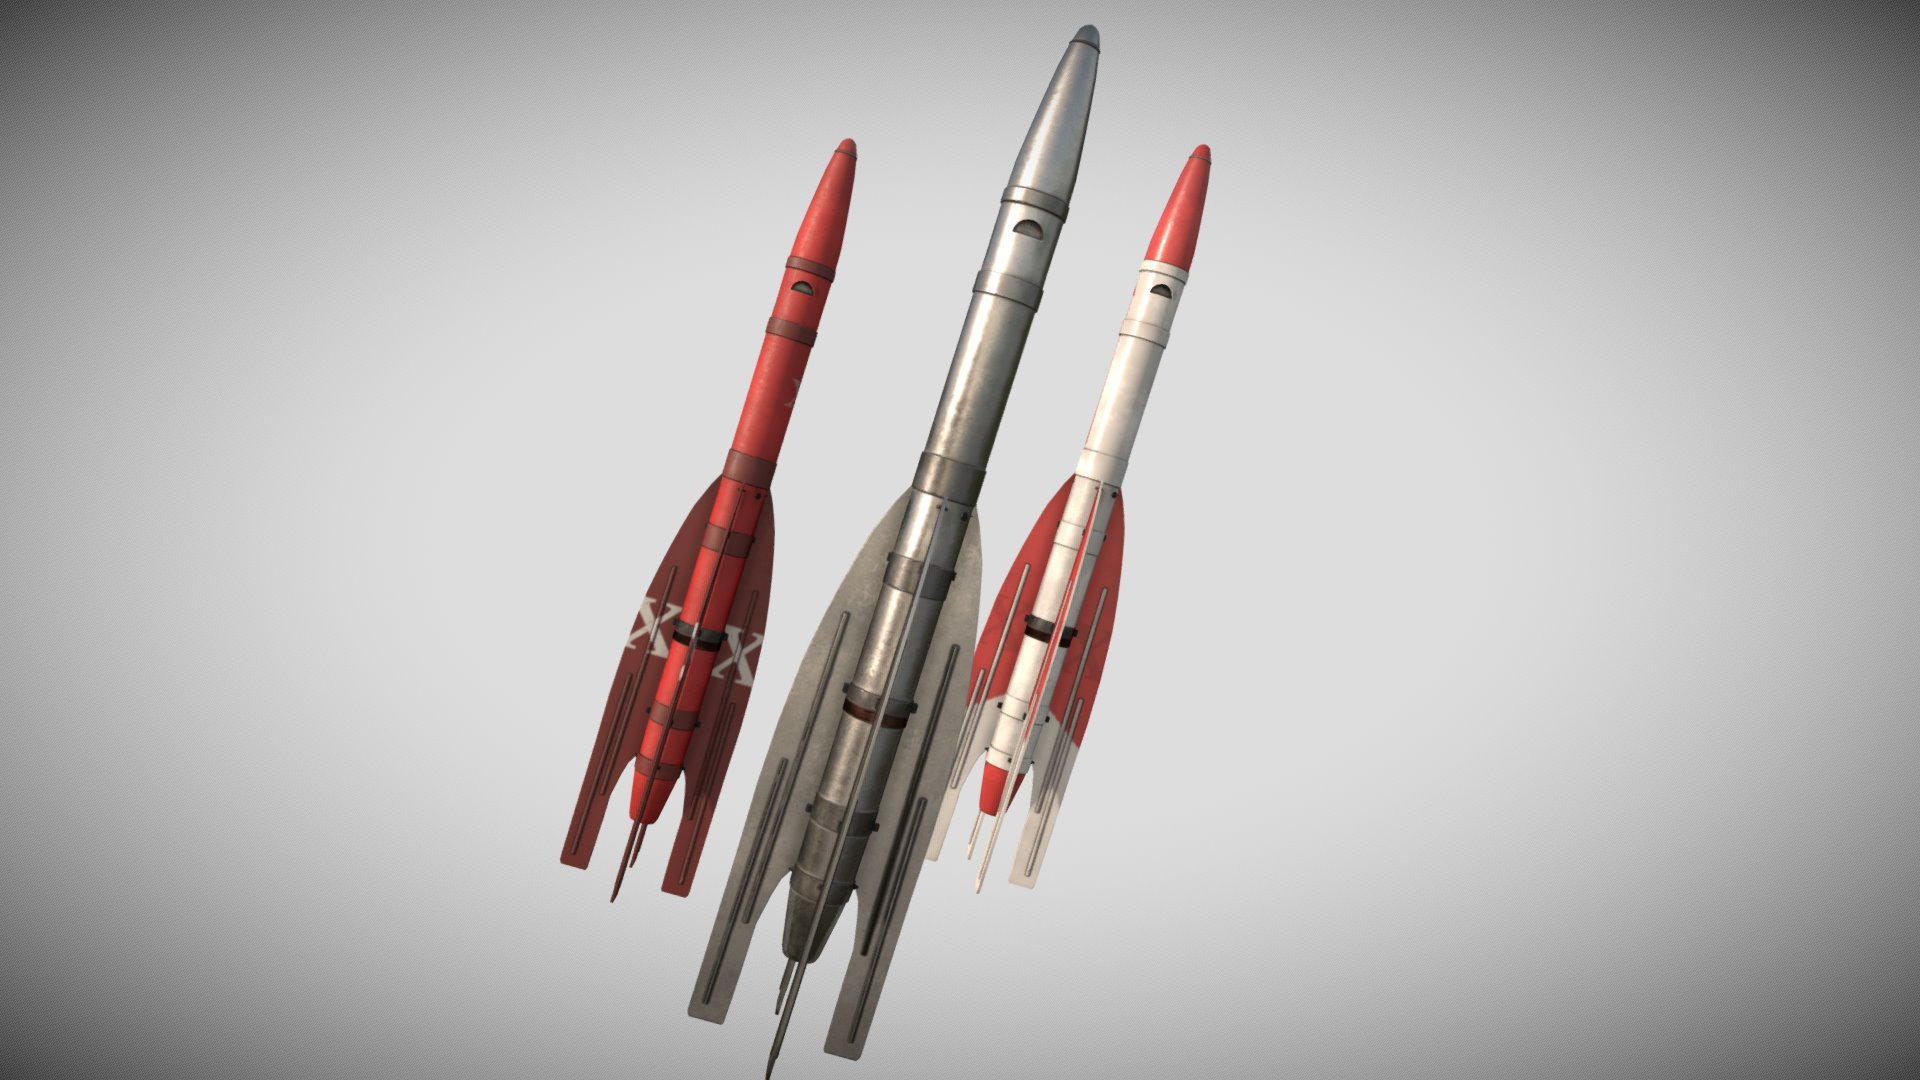 The Gird 10 Rocket was a succesful liquid fueled design from the Russian &ldquo;GIRD